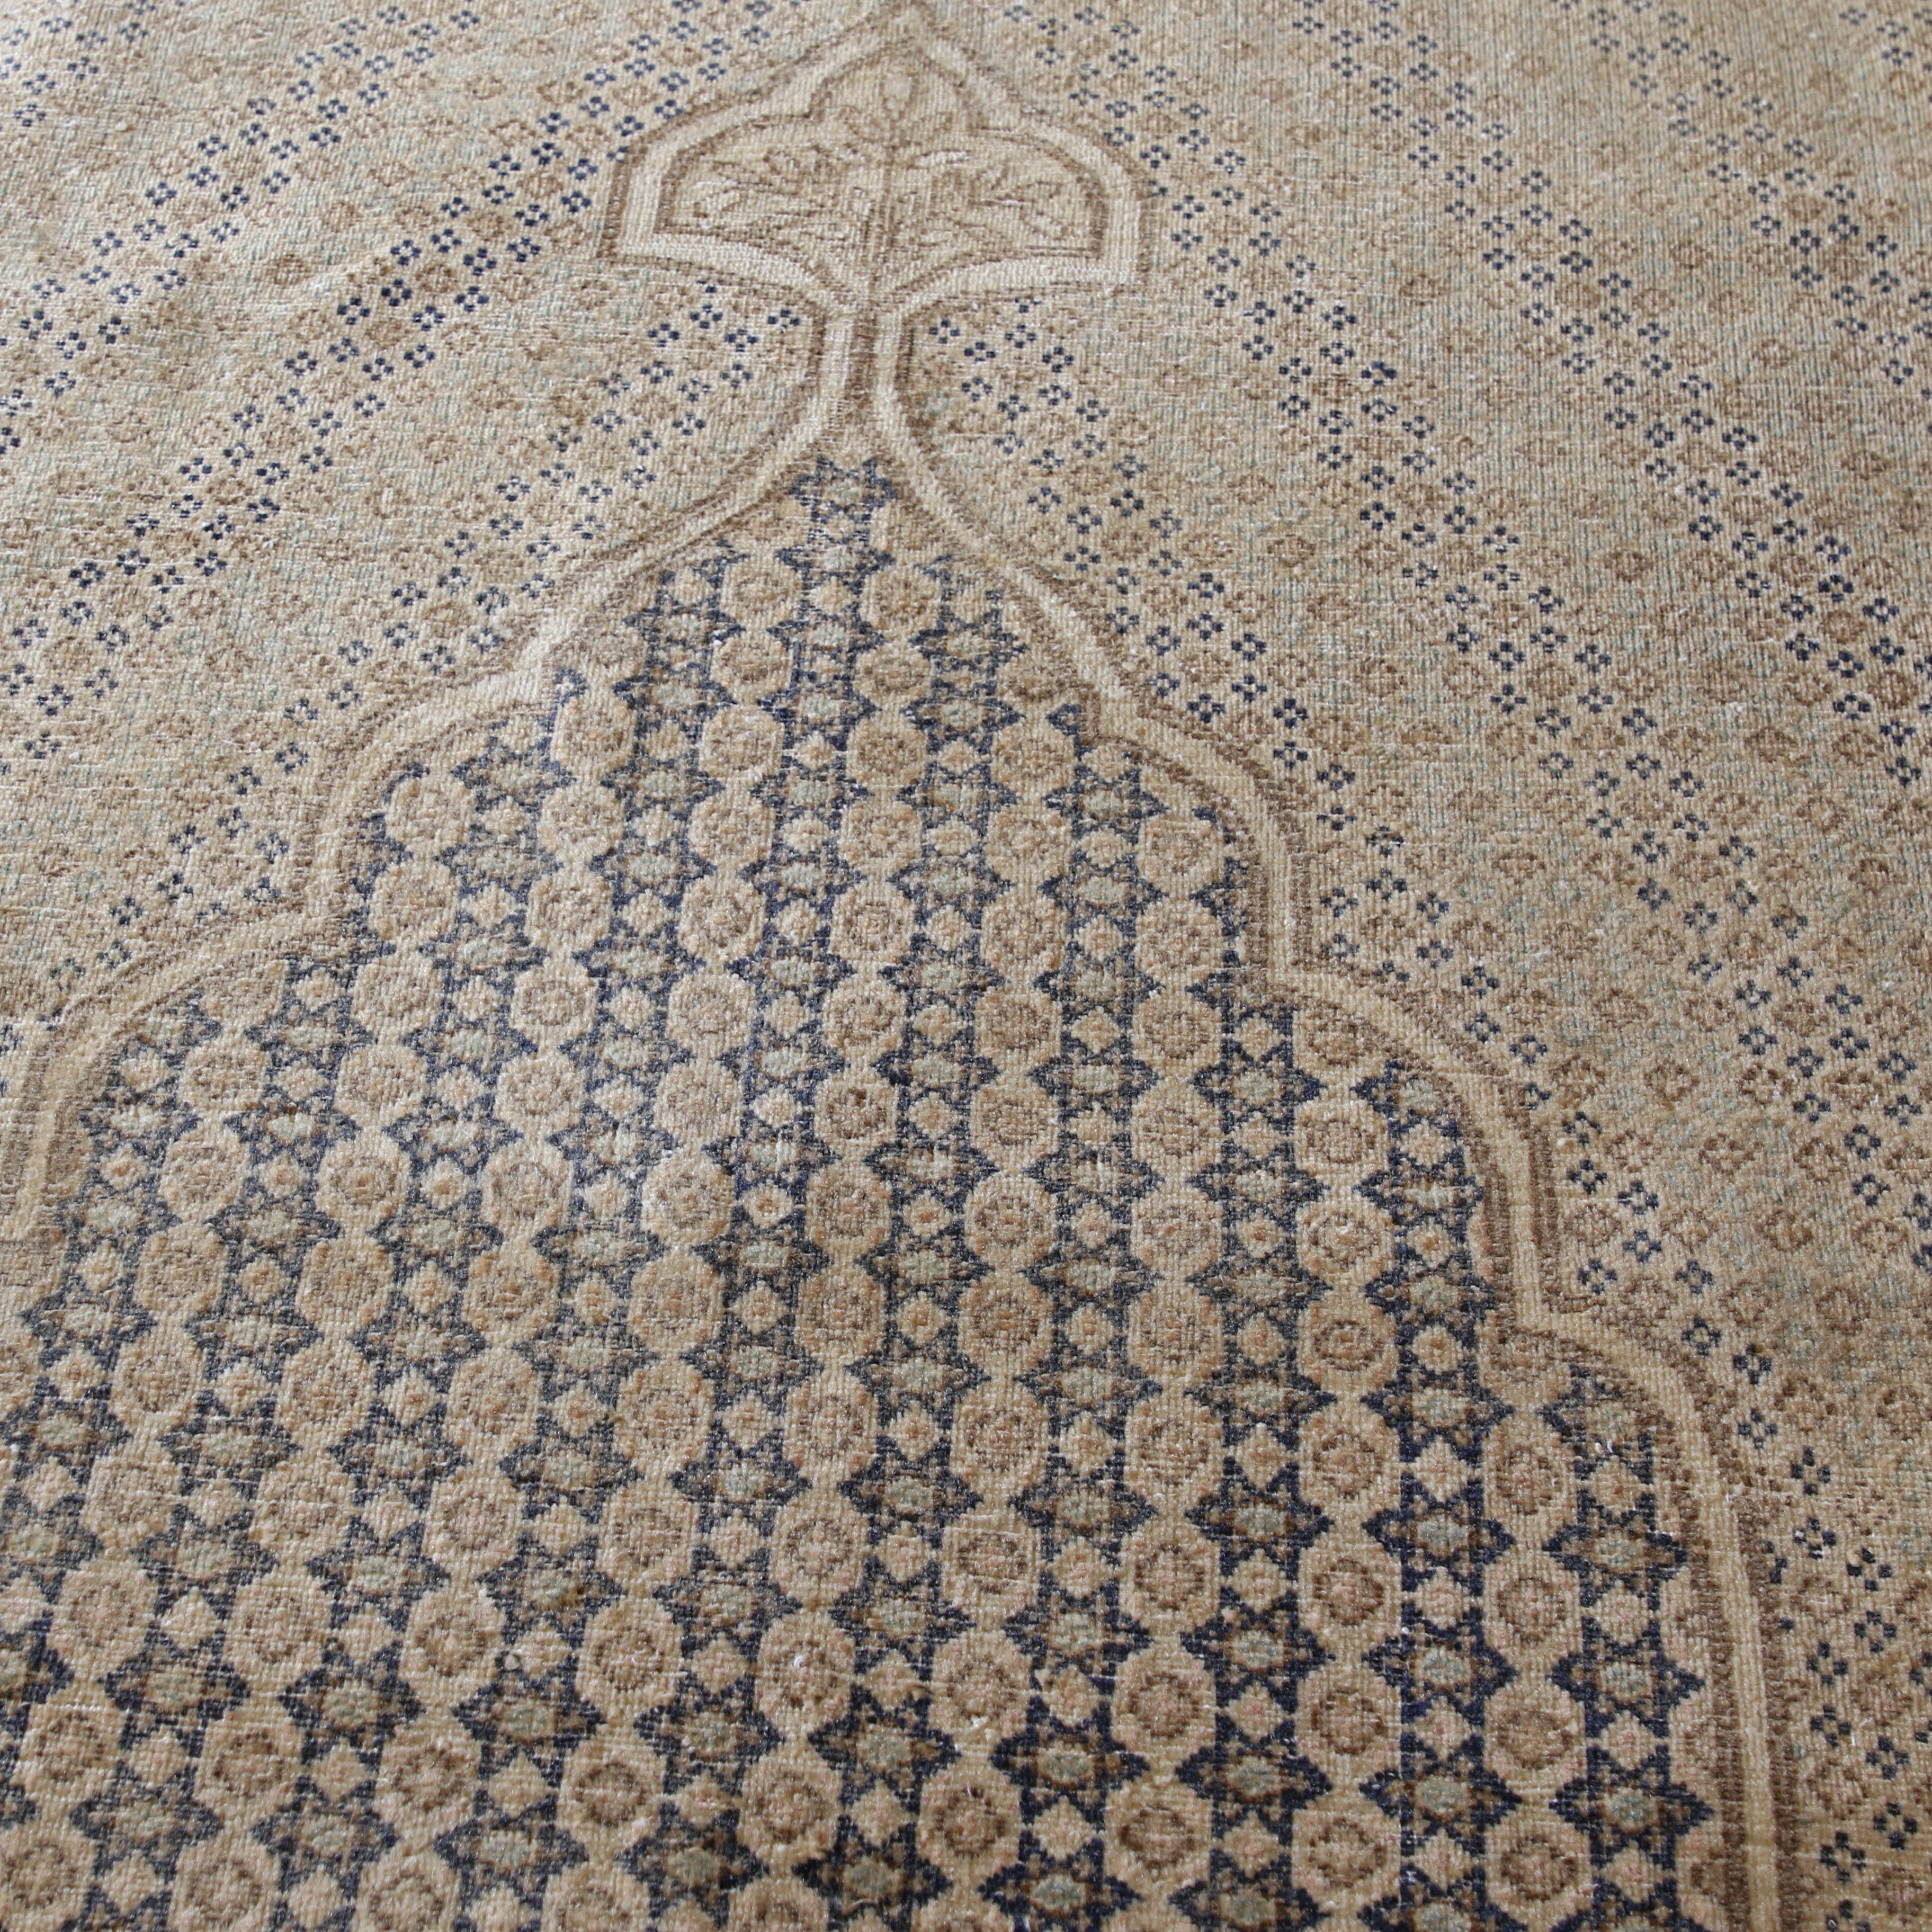 Kerman Rug with Delicate Motif Pattern